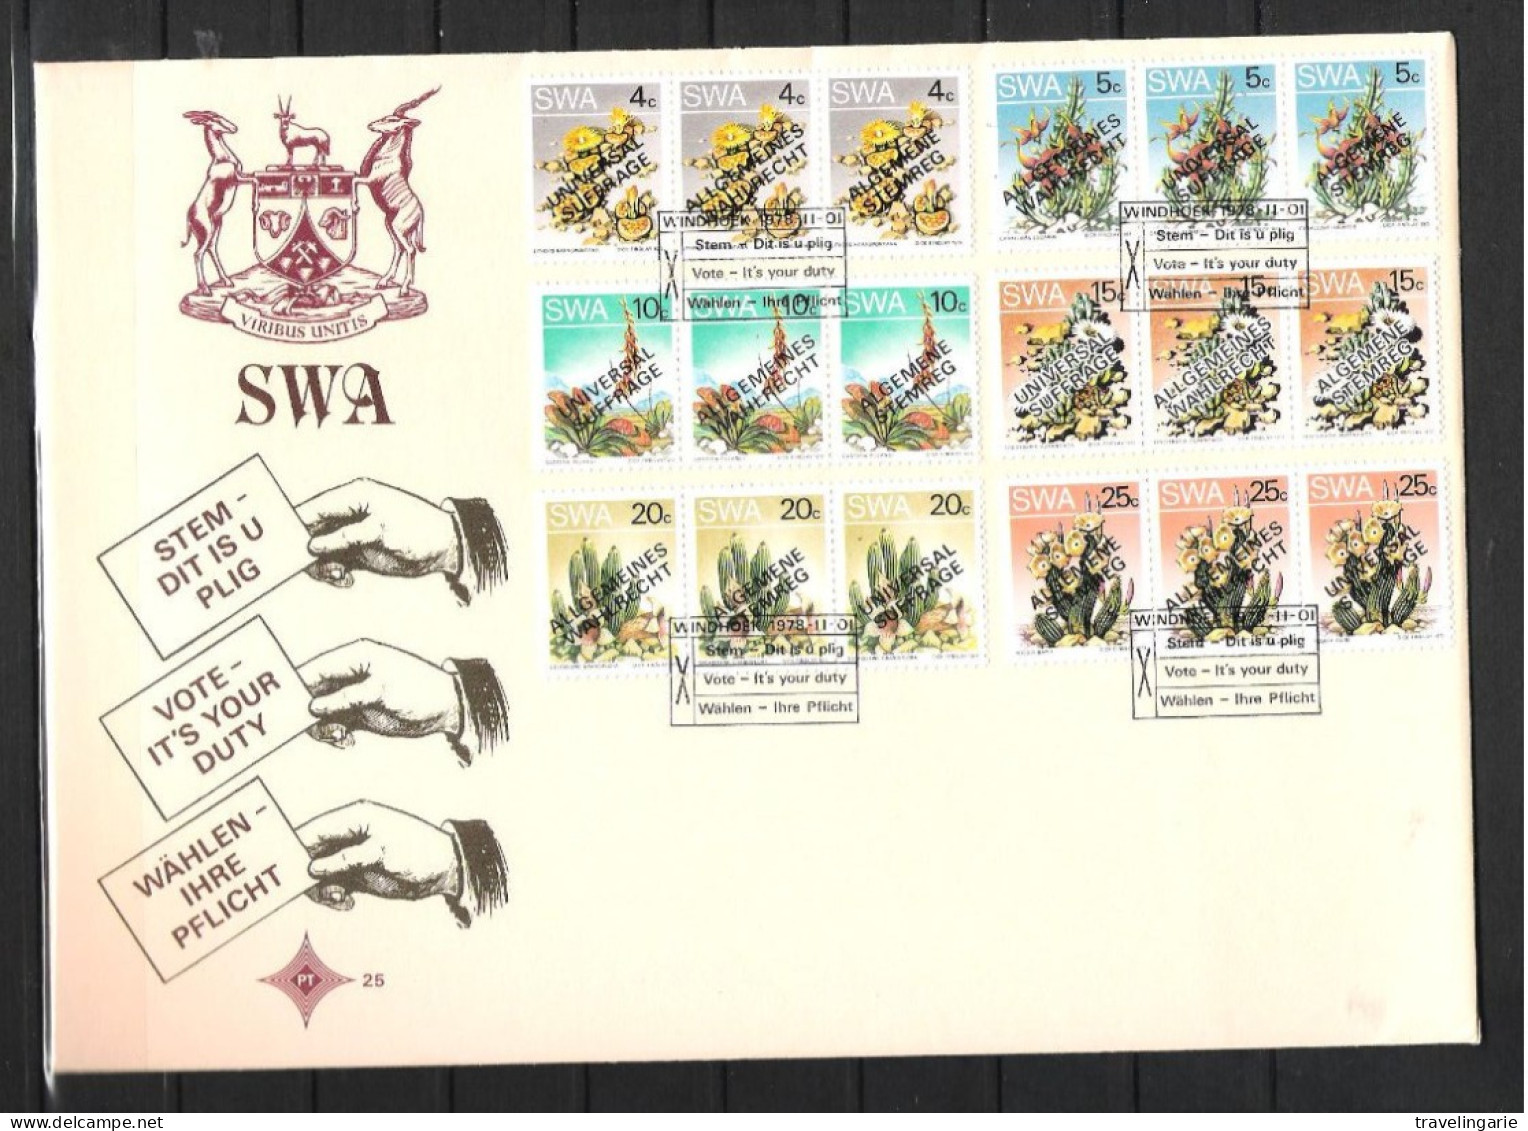 South West Africa 1978 Election Overprint Cactus Stamps FDC No. 25 - Sukkulenten